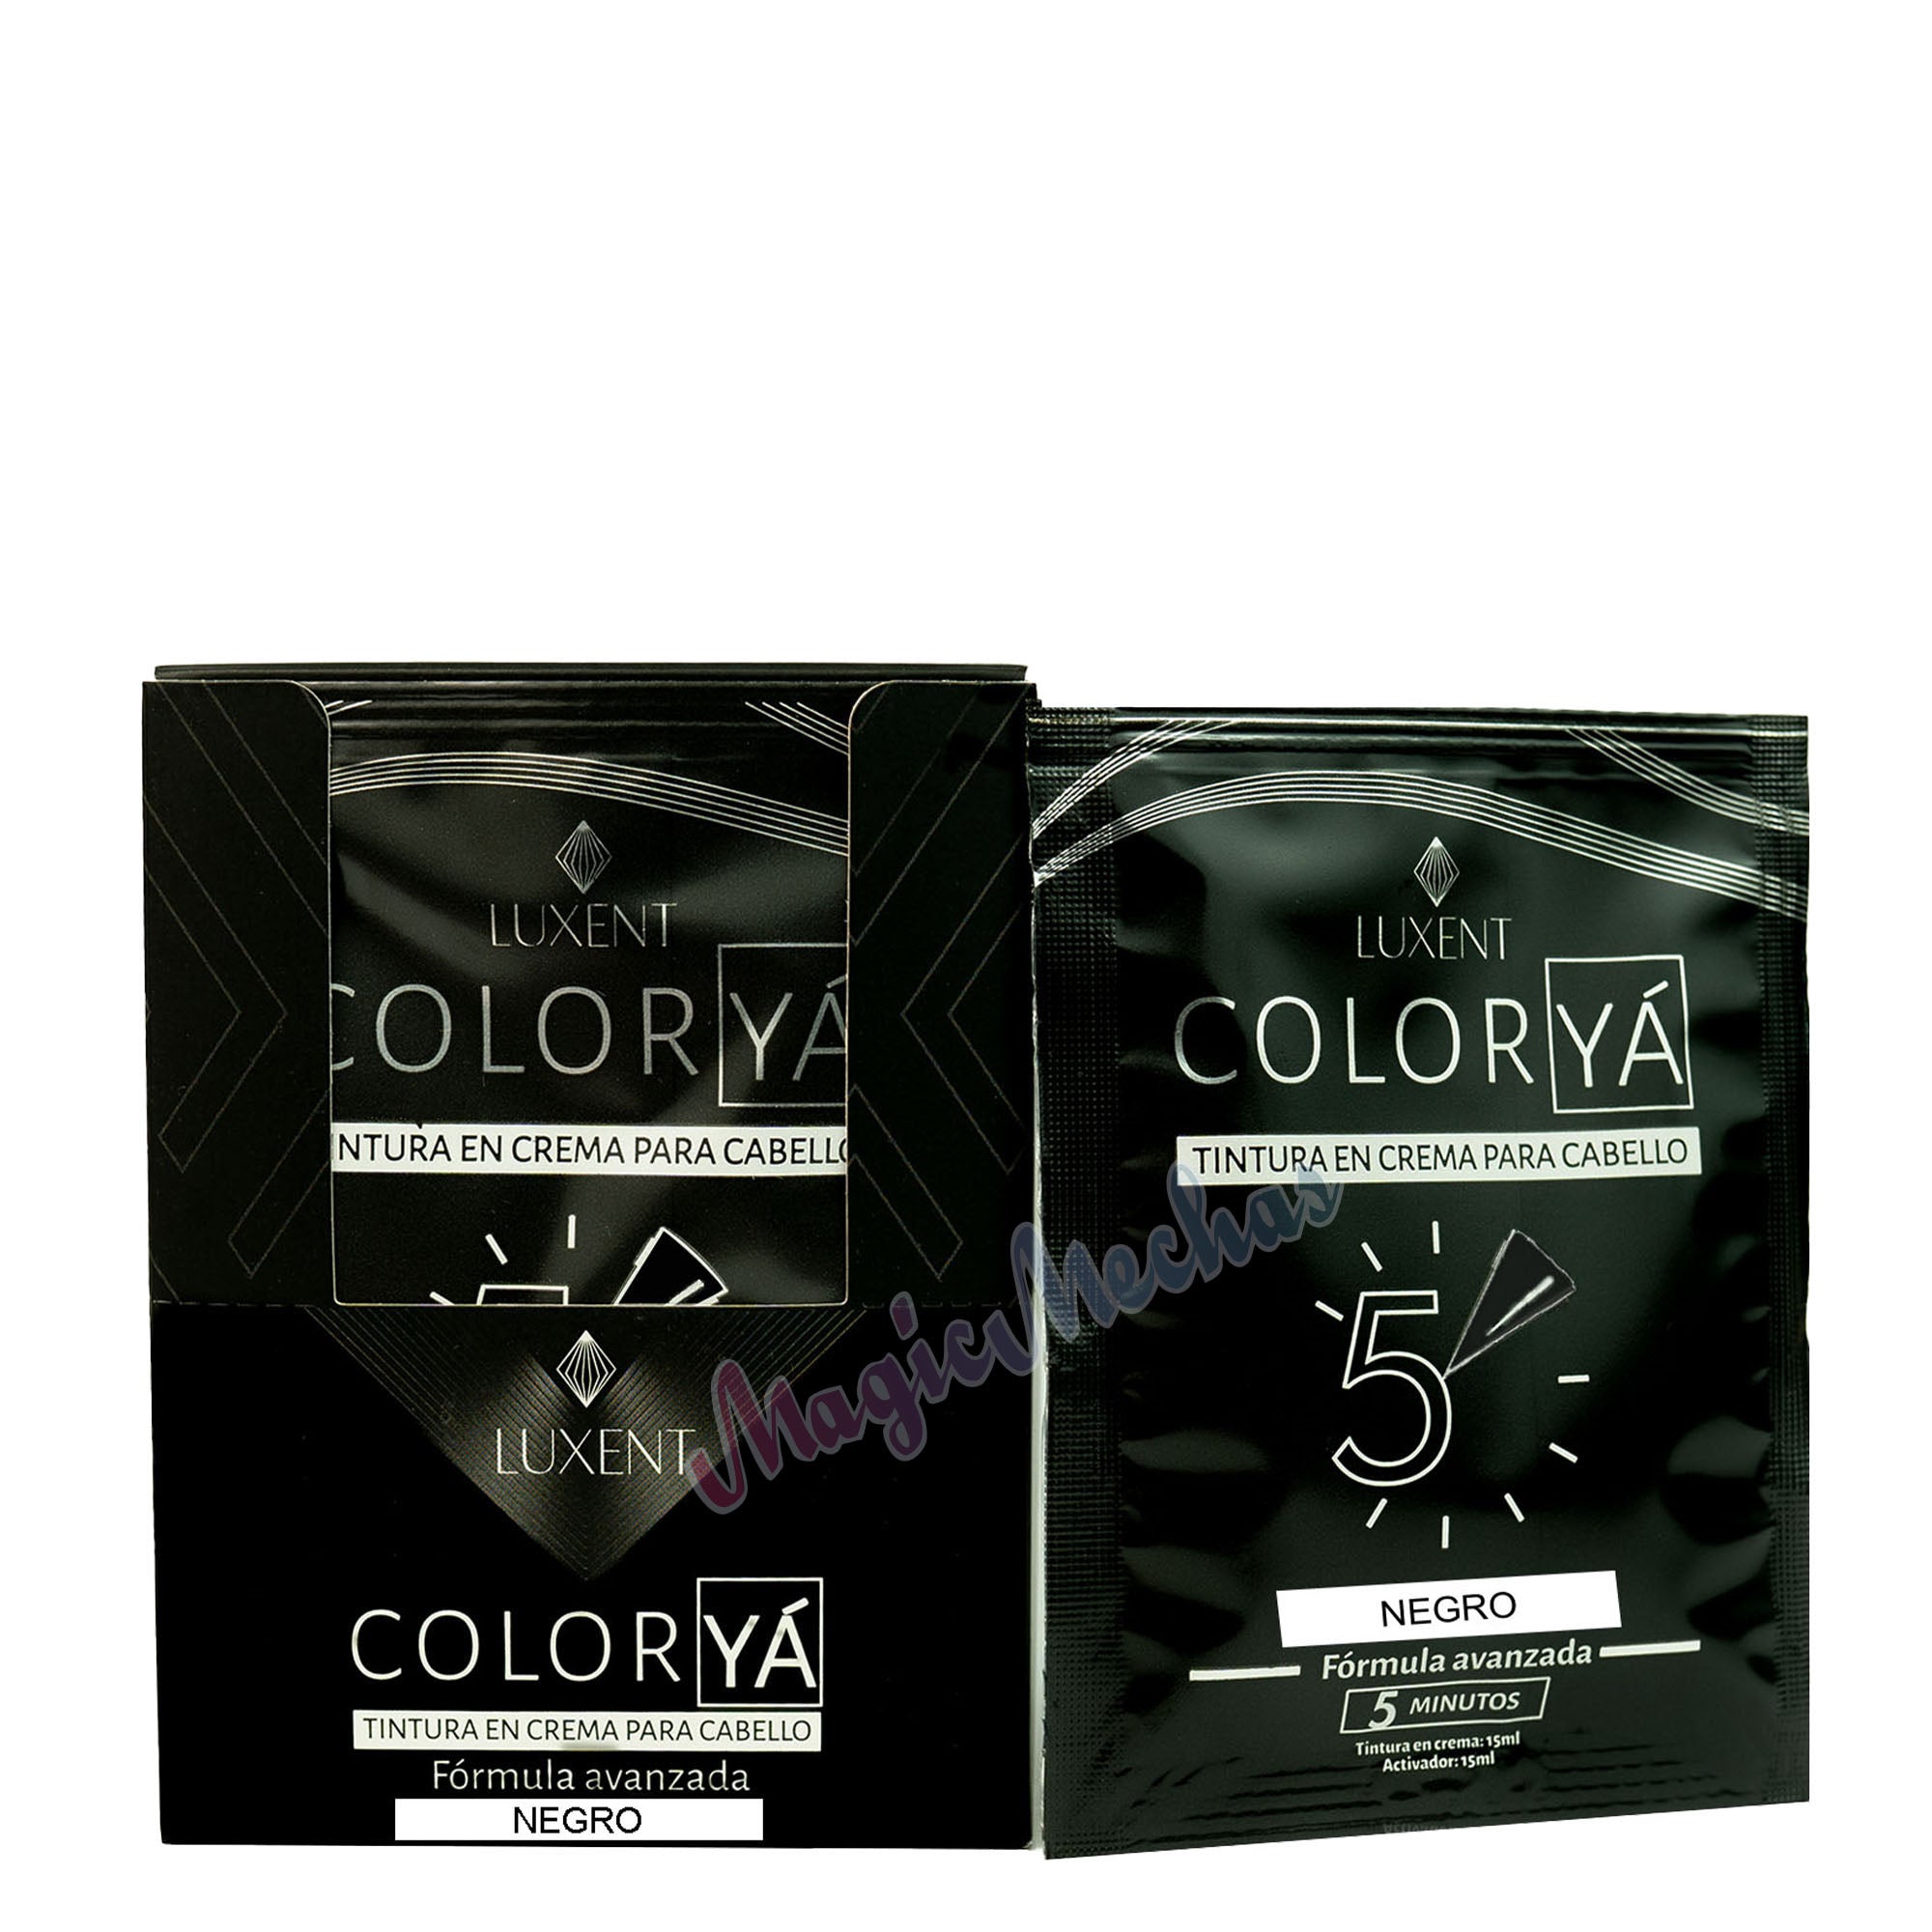 Luxent ColorYa Tintura En Crema Negro Sachet 15ml Luxent